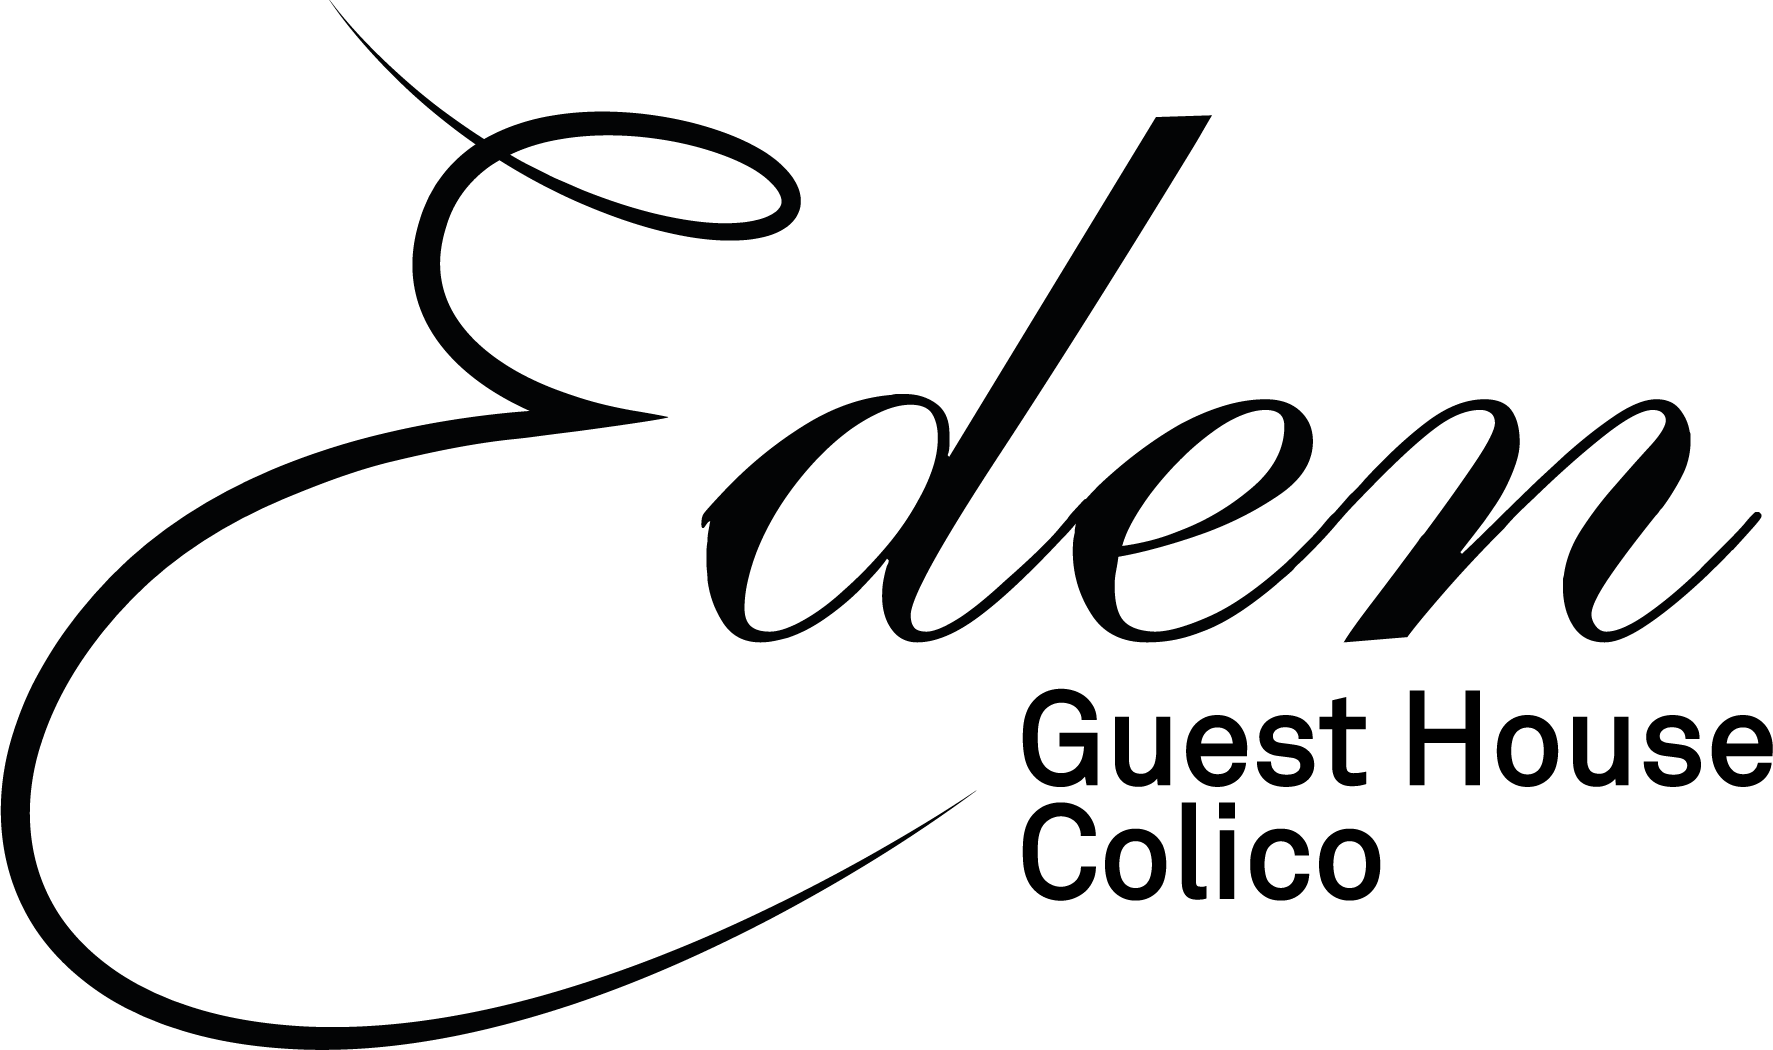 Eden Guest House Colico